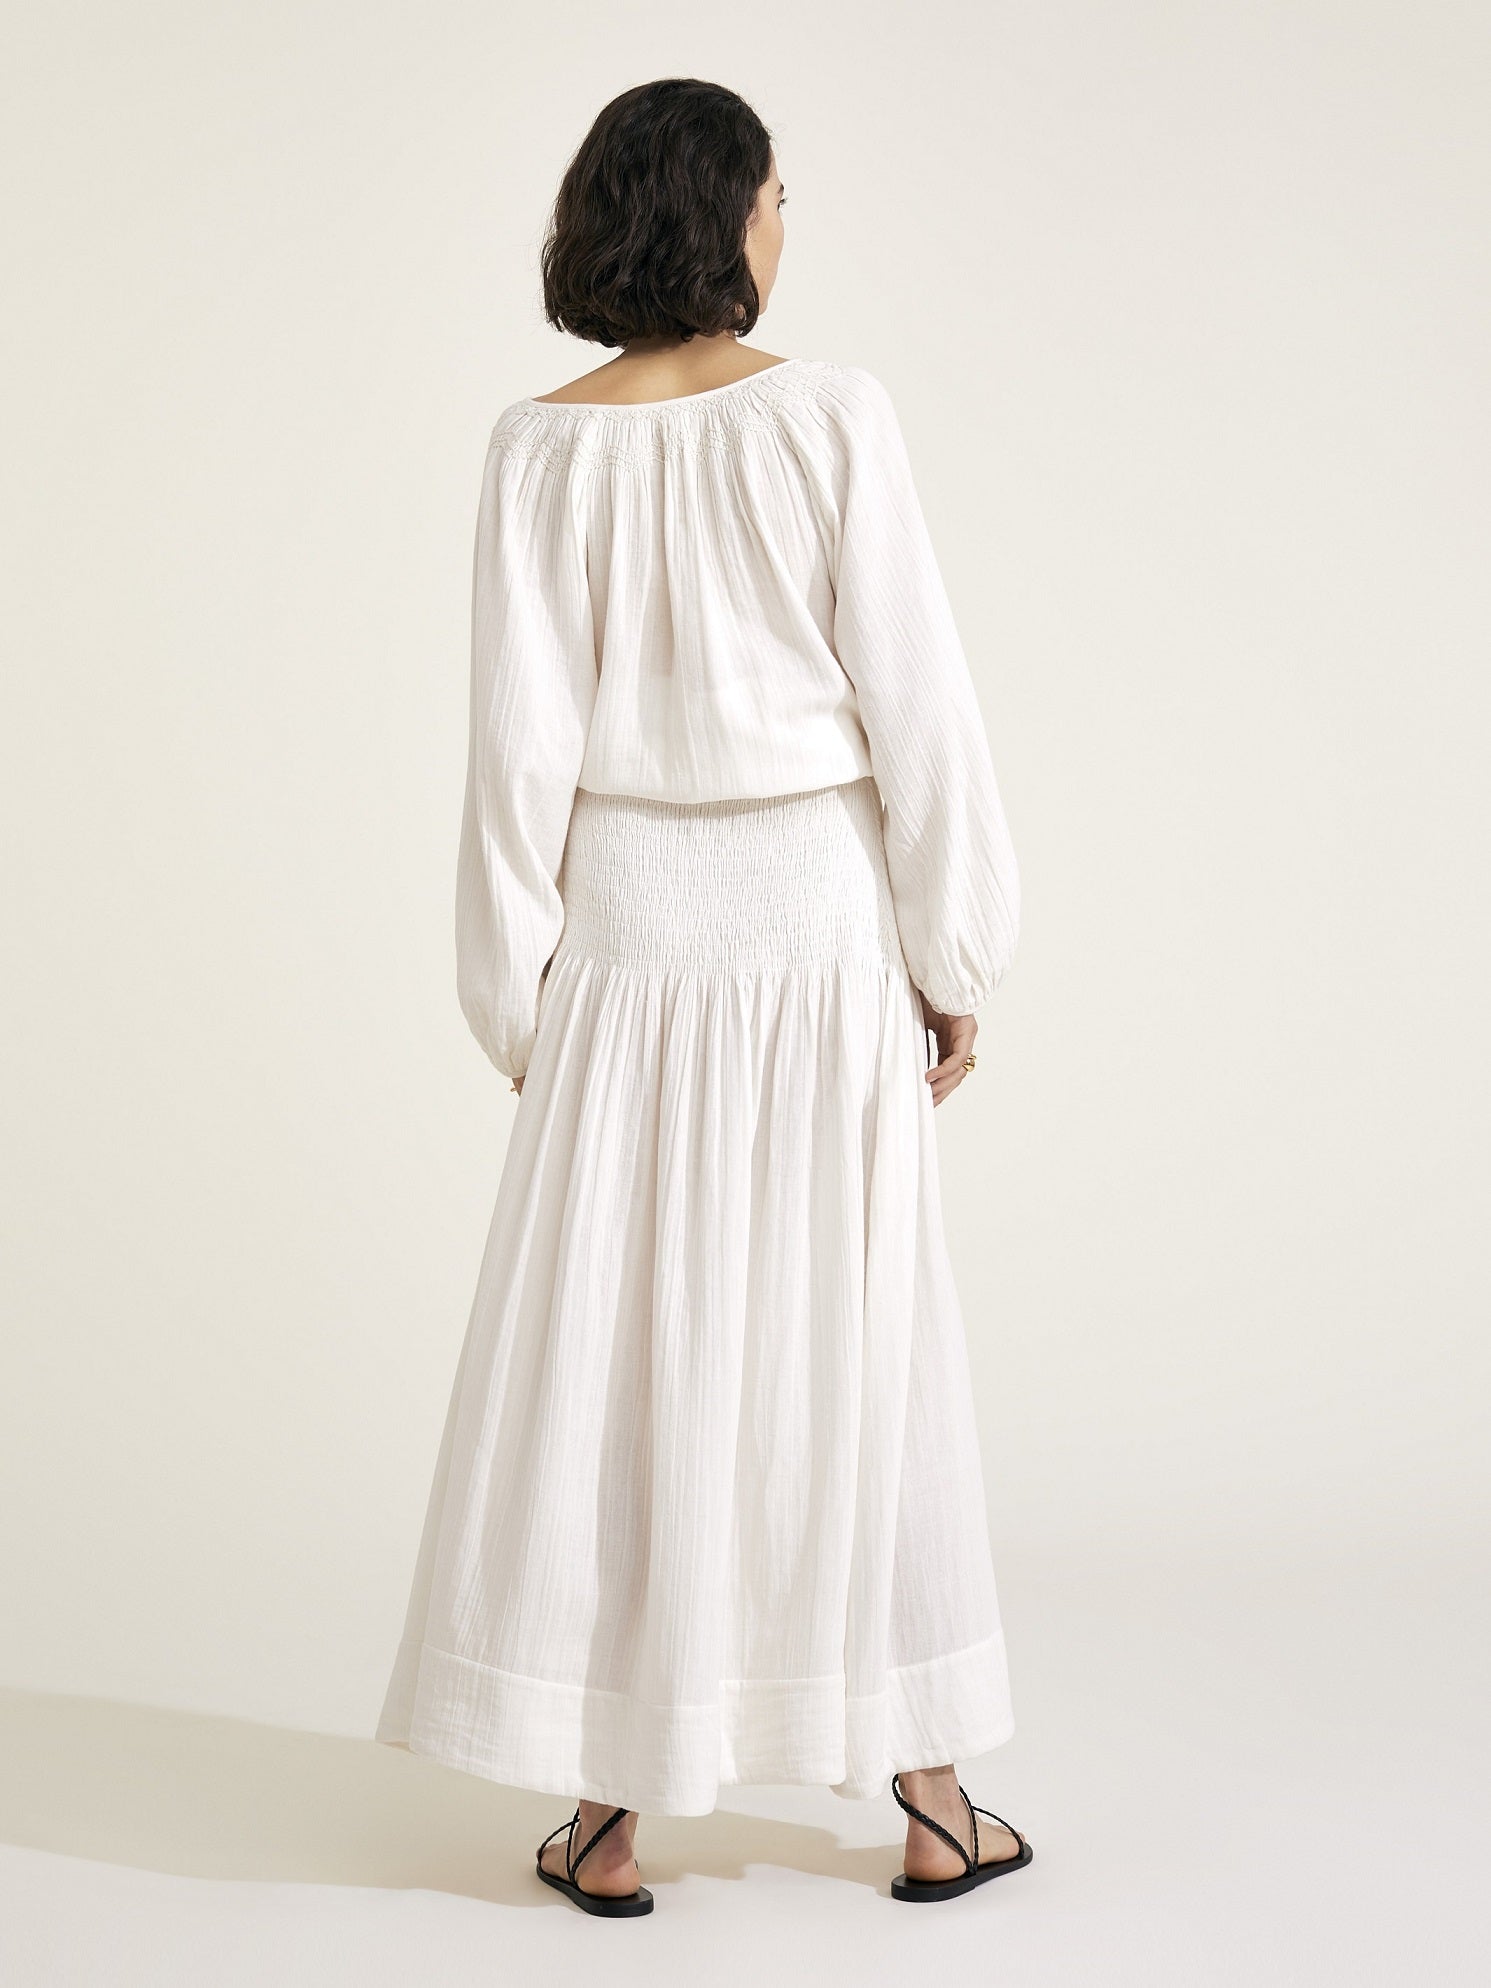 SULA - Panna Cotton Skirt - Mondo Corsini